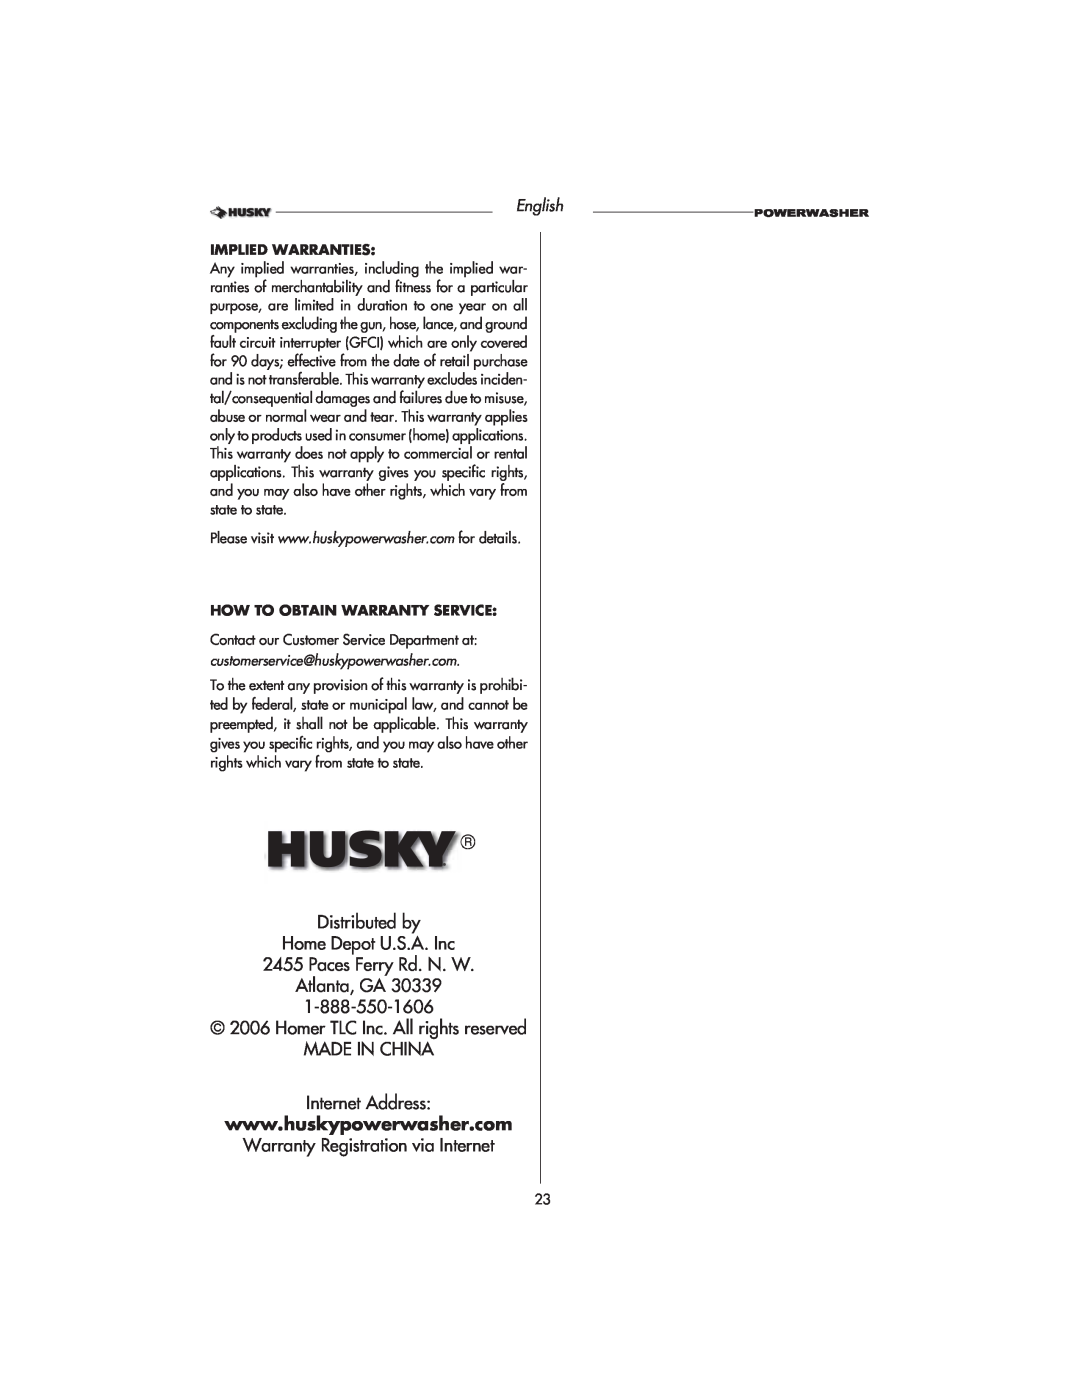 Husky HD1500 warranty Distributed by Home Depot U.S.A. Inc, Paces Ferry Rd. N. W Atlanta, GA, 1-888-550-1606, English 